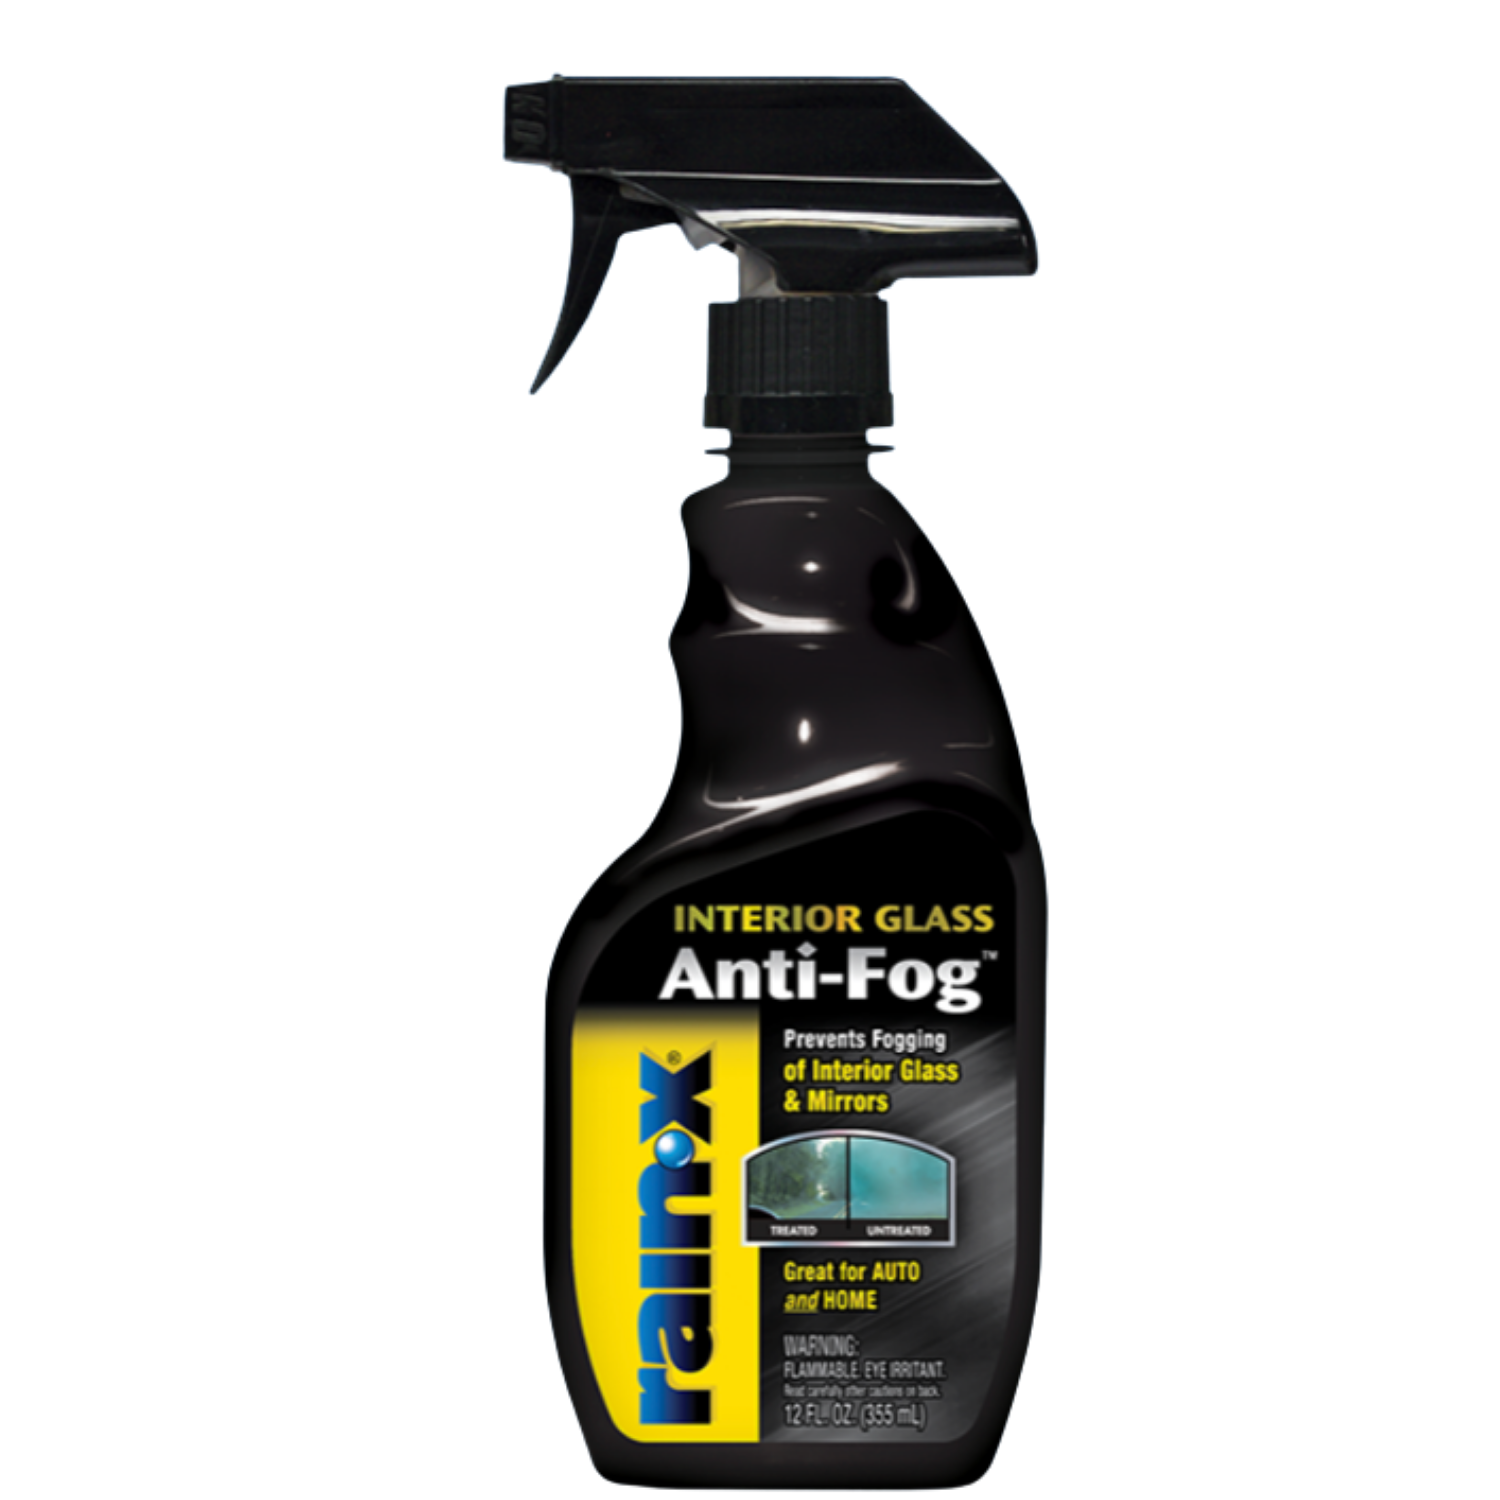 Rain-X Interior Glass Anti-Fog, Car Defogger Glass Cleaner Spray